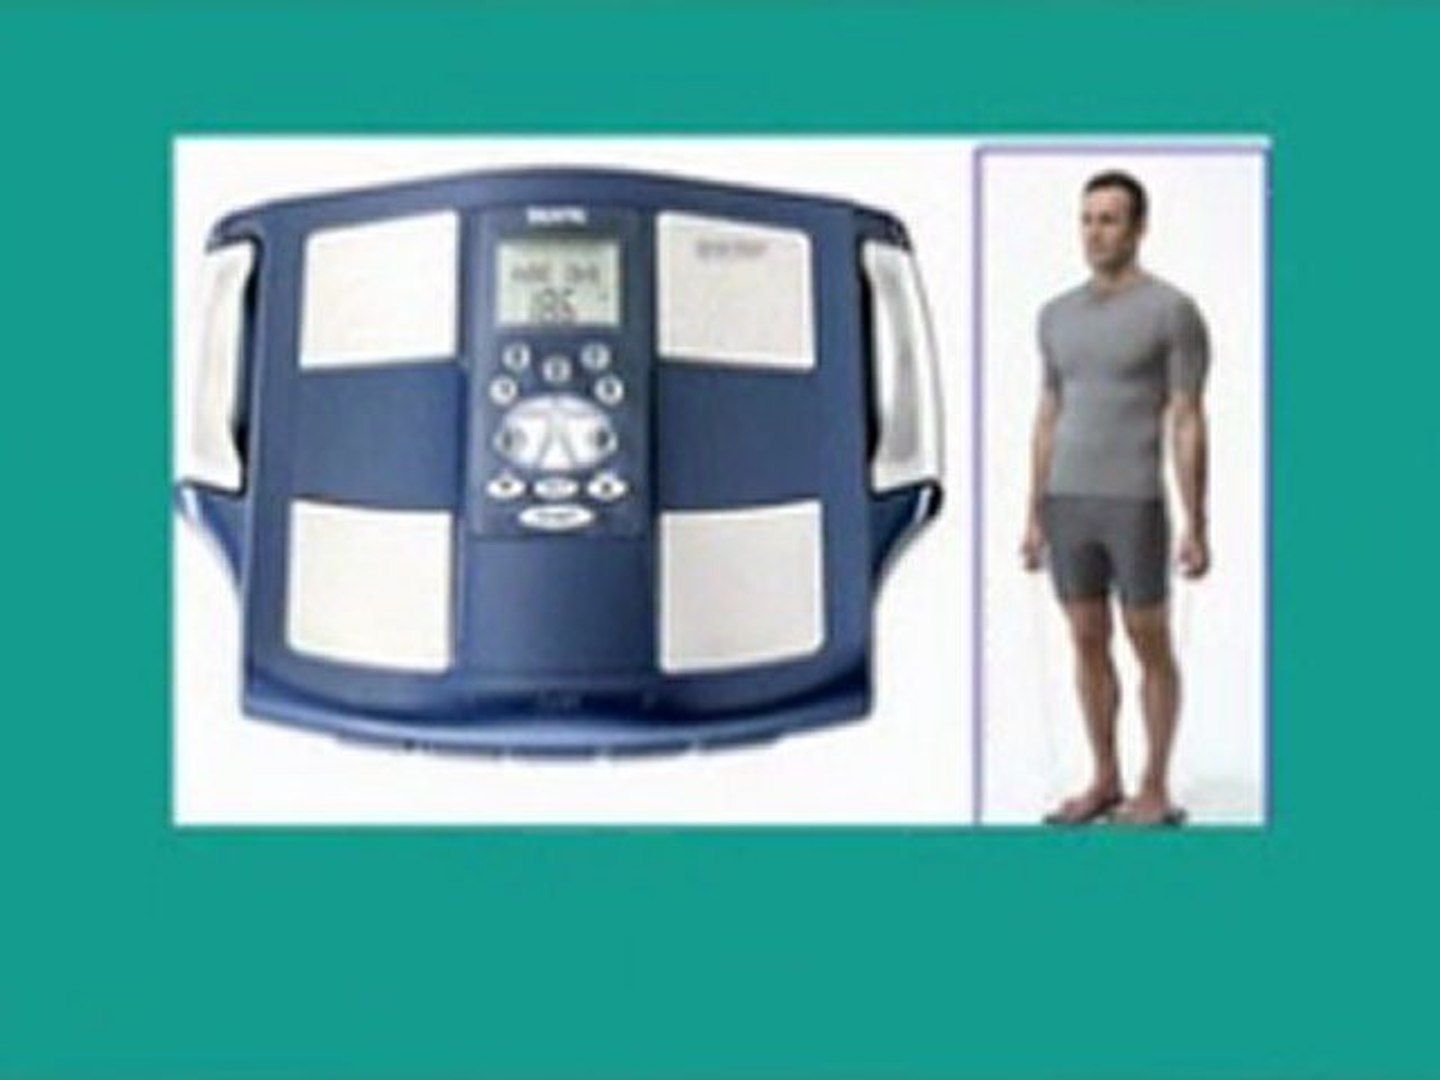 Tanita BC 558 Ironman Segmental Body Composition Monitor - video Dailymotion